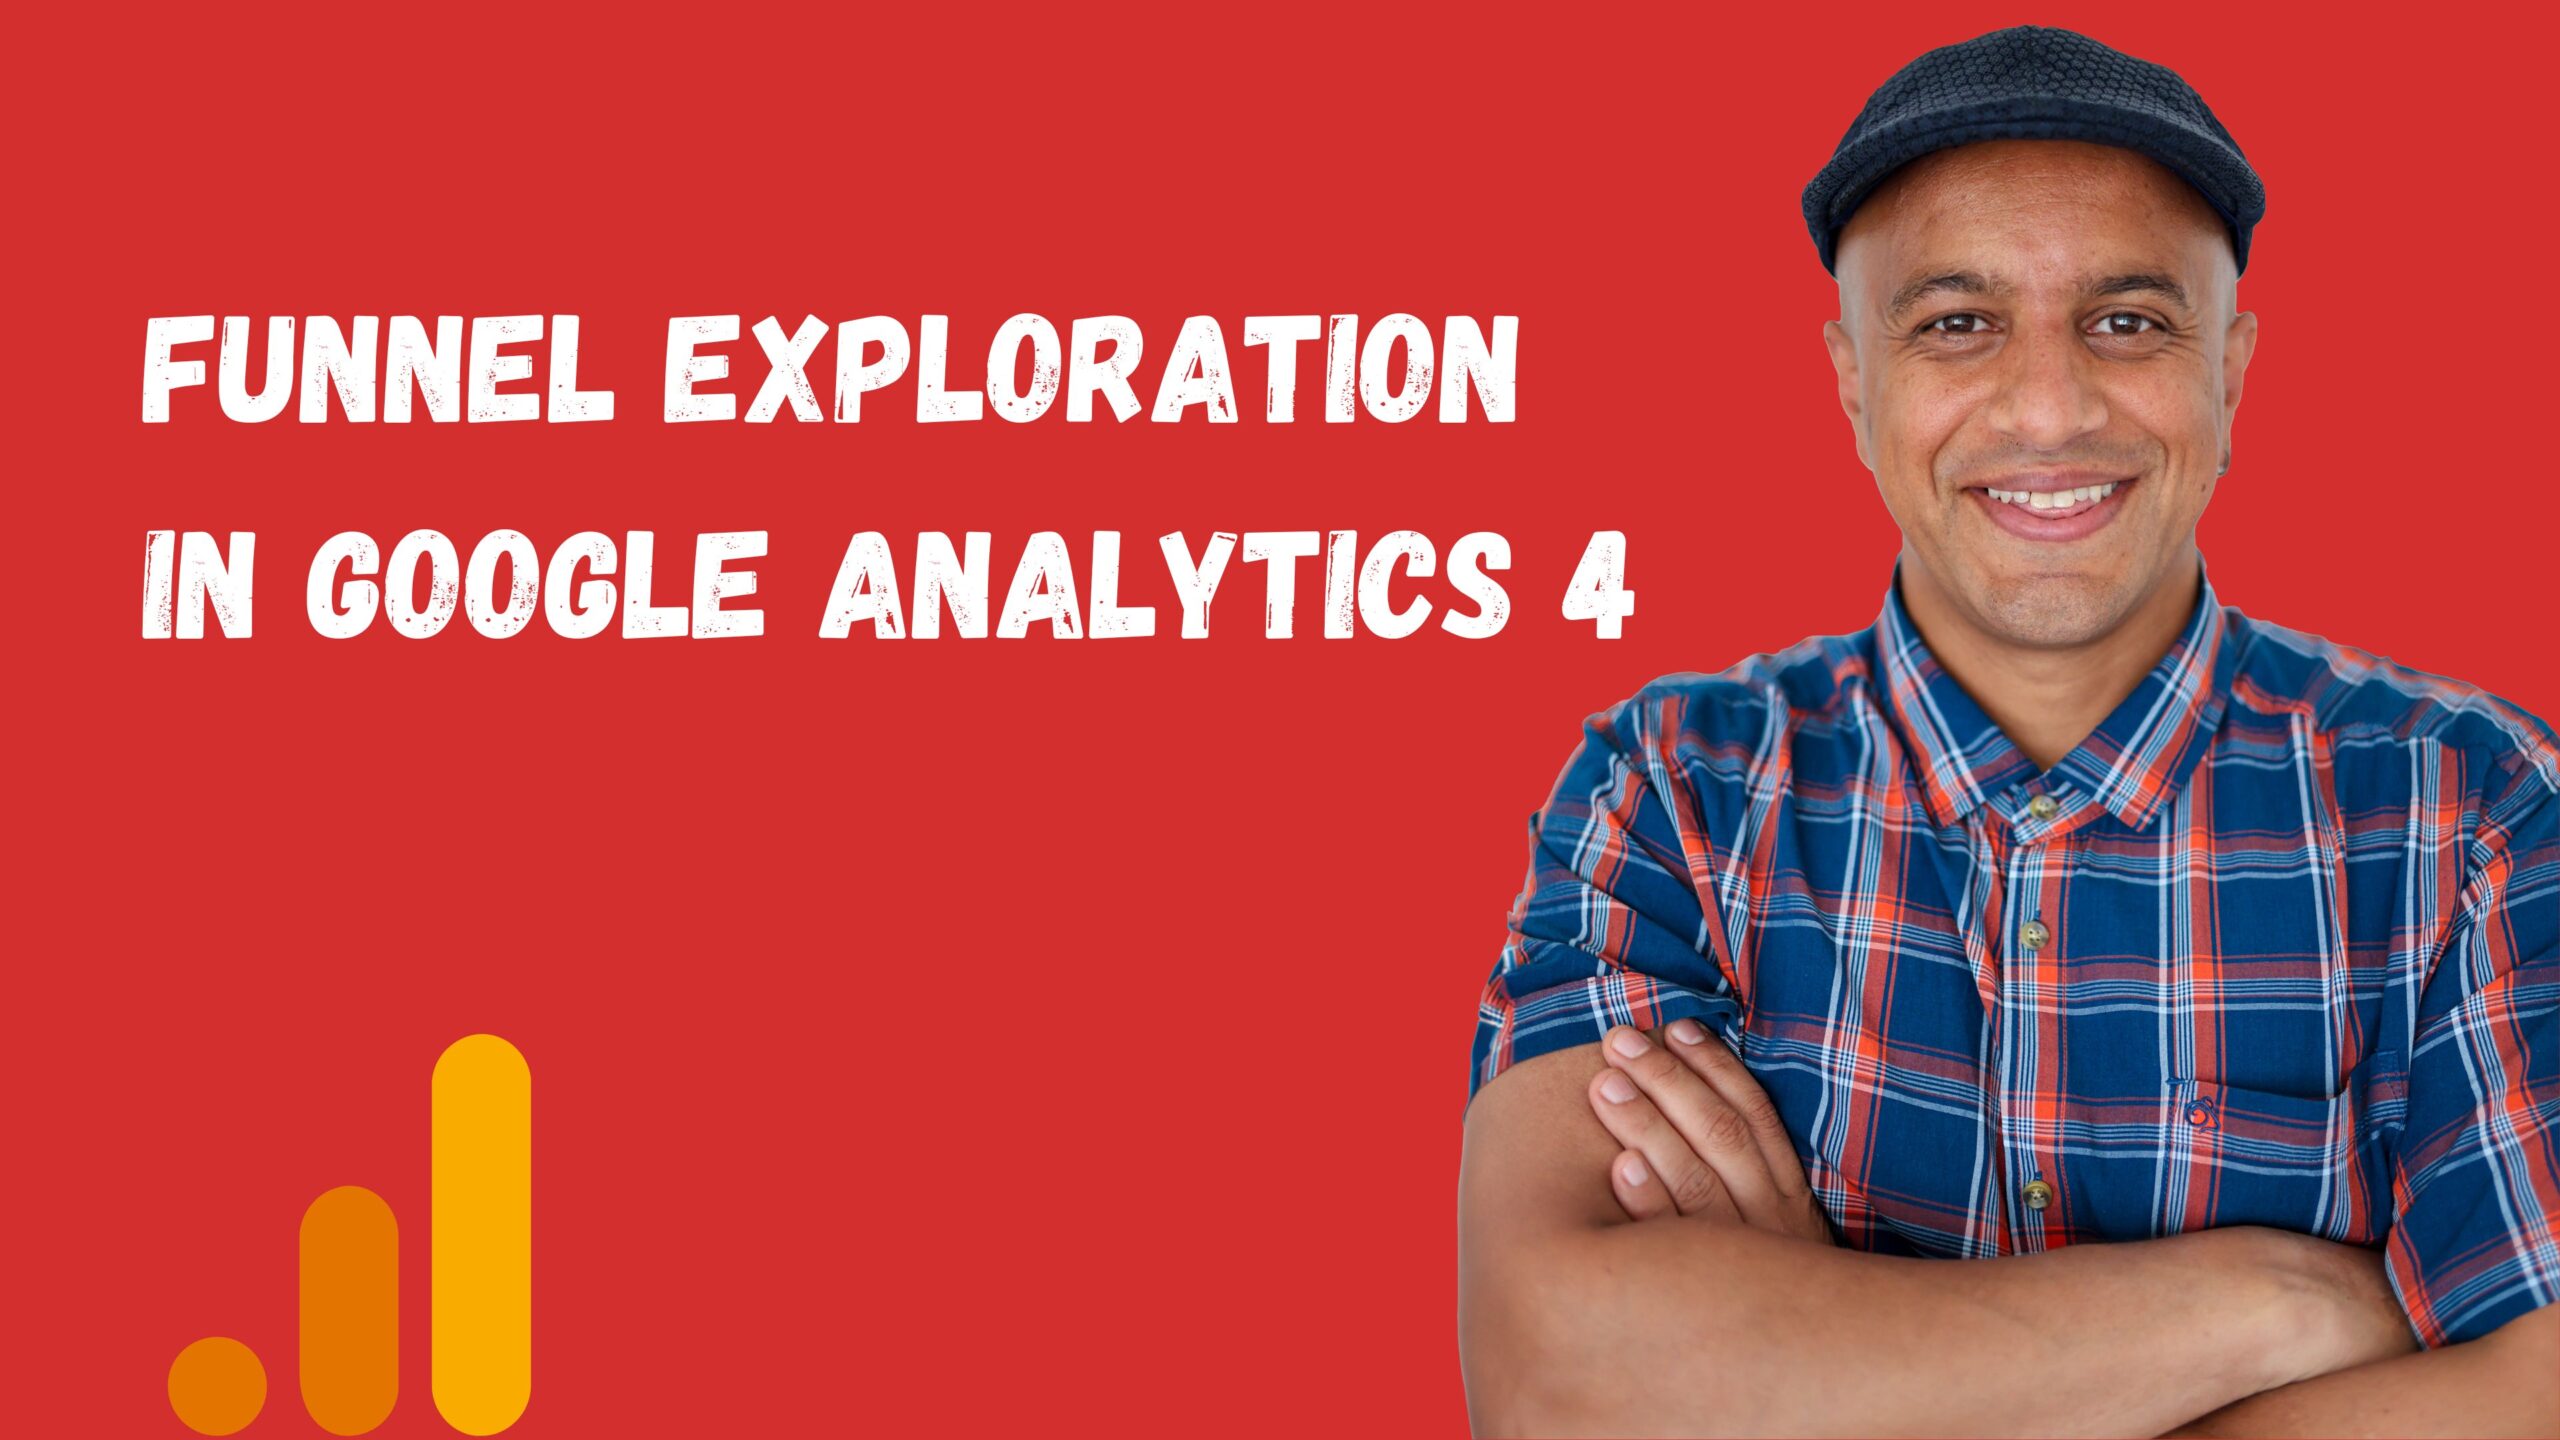 Funnel exploration in Google Analytics 4